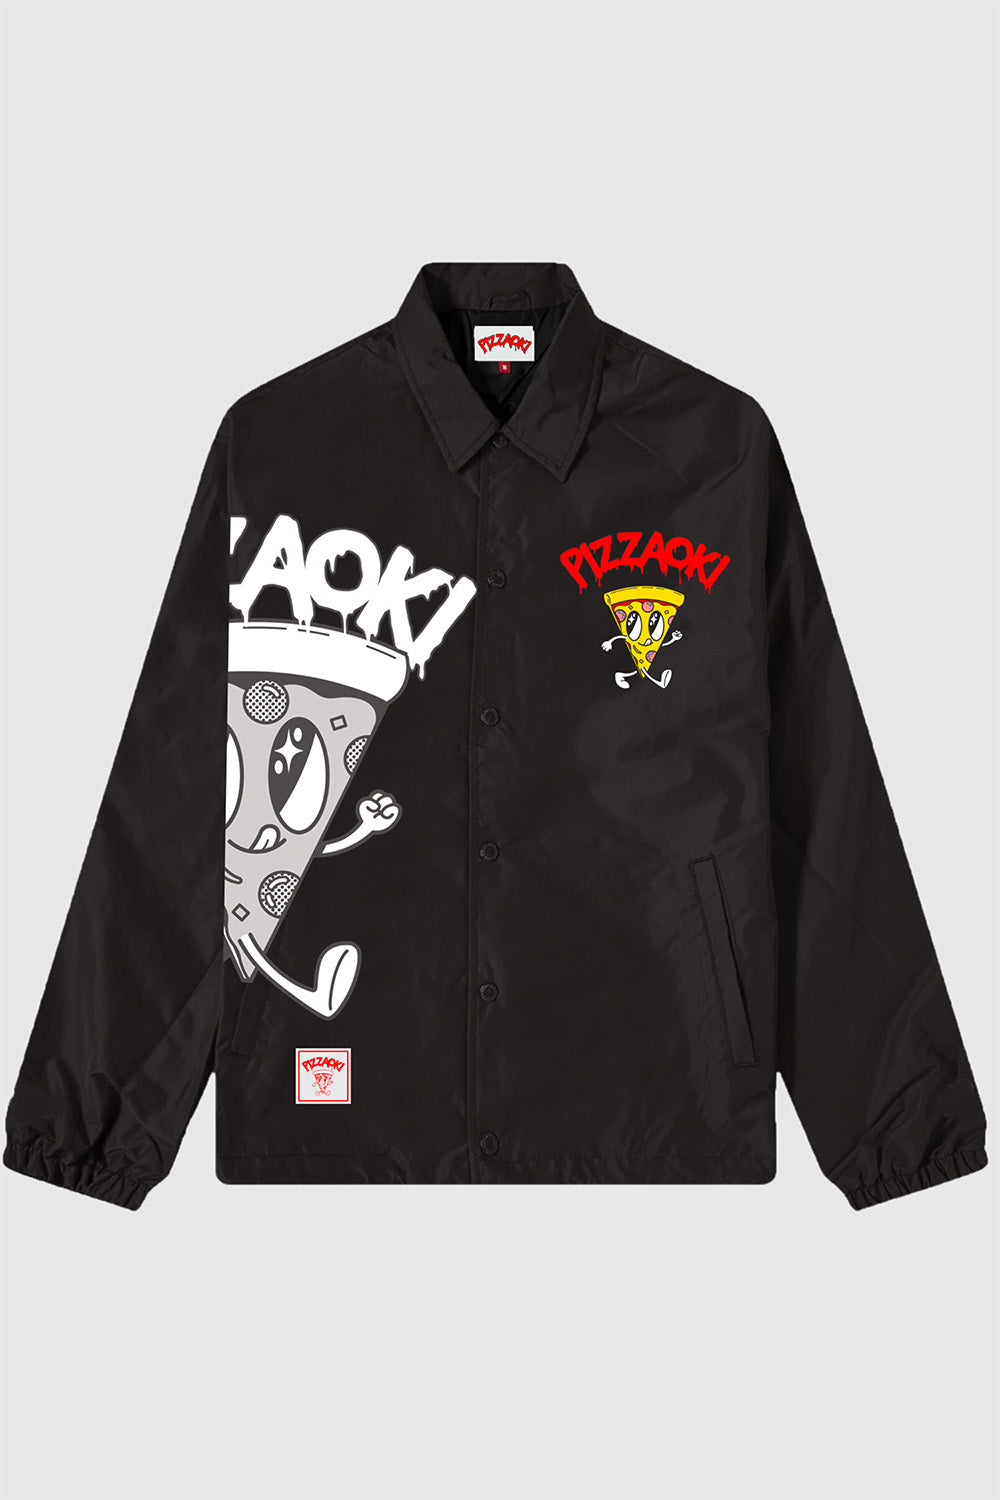 Pizzaoki Graphic Coach Jacket - Black